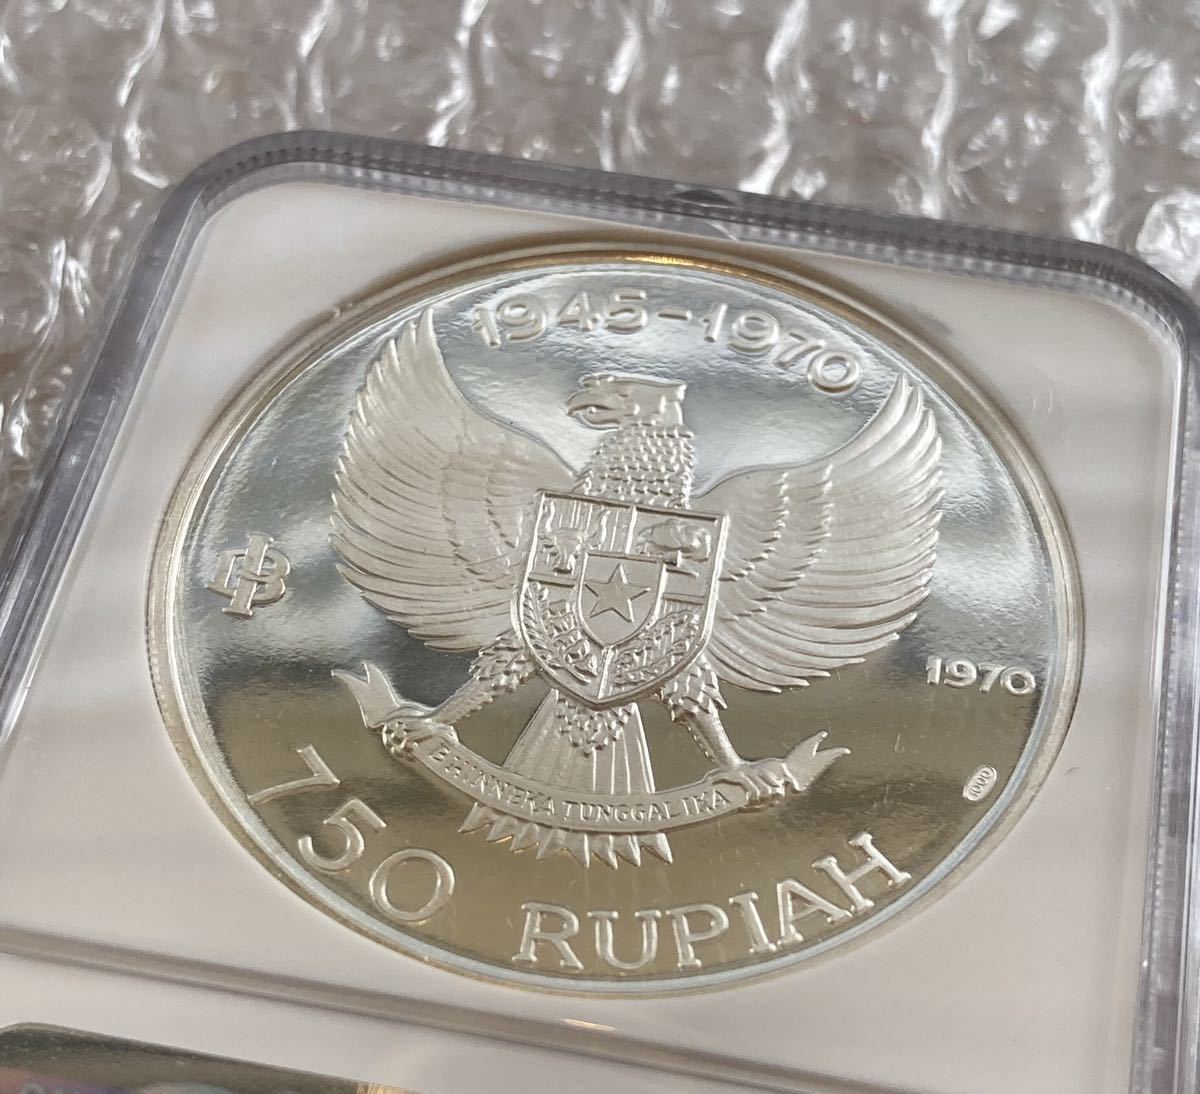 NGC鑑定PF67 インドネシア ガルーダ銀貨 1970年 750ルピア シルバー プルーフコイン アジア Indonesia Garuda Bird silver coin